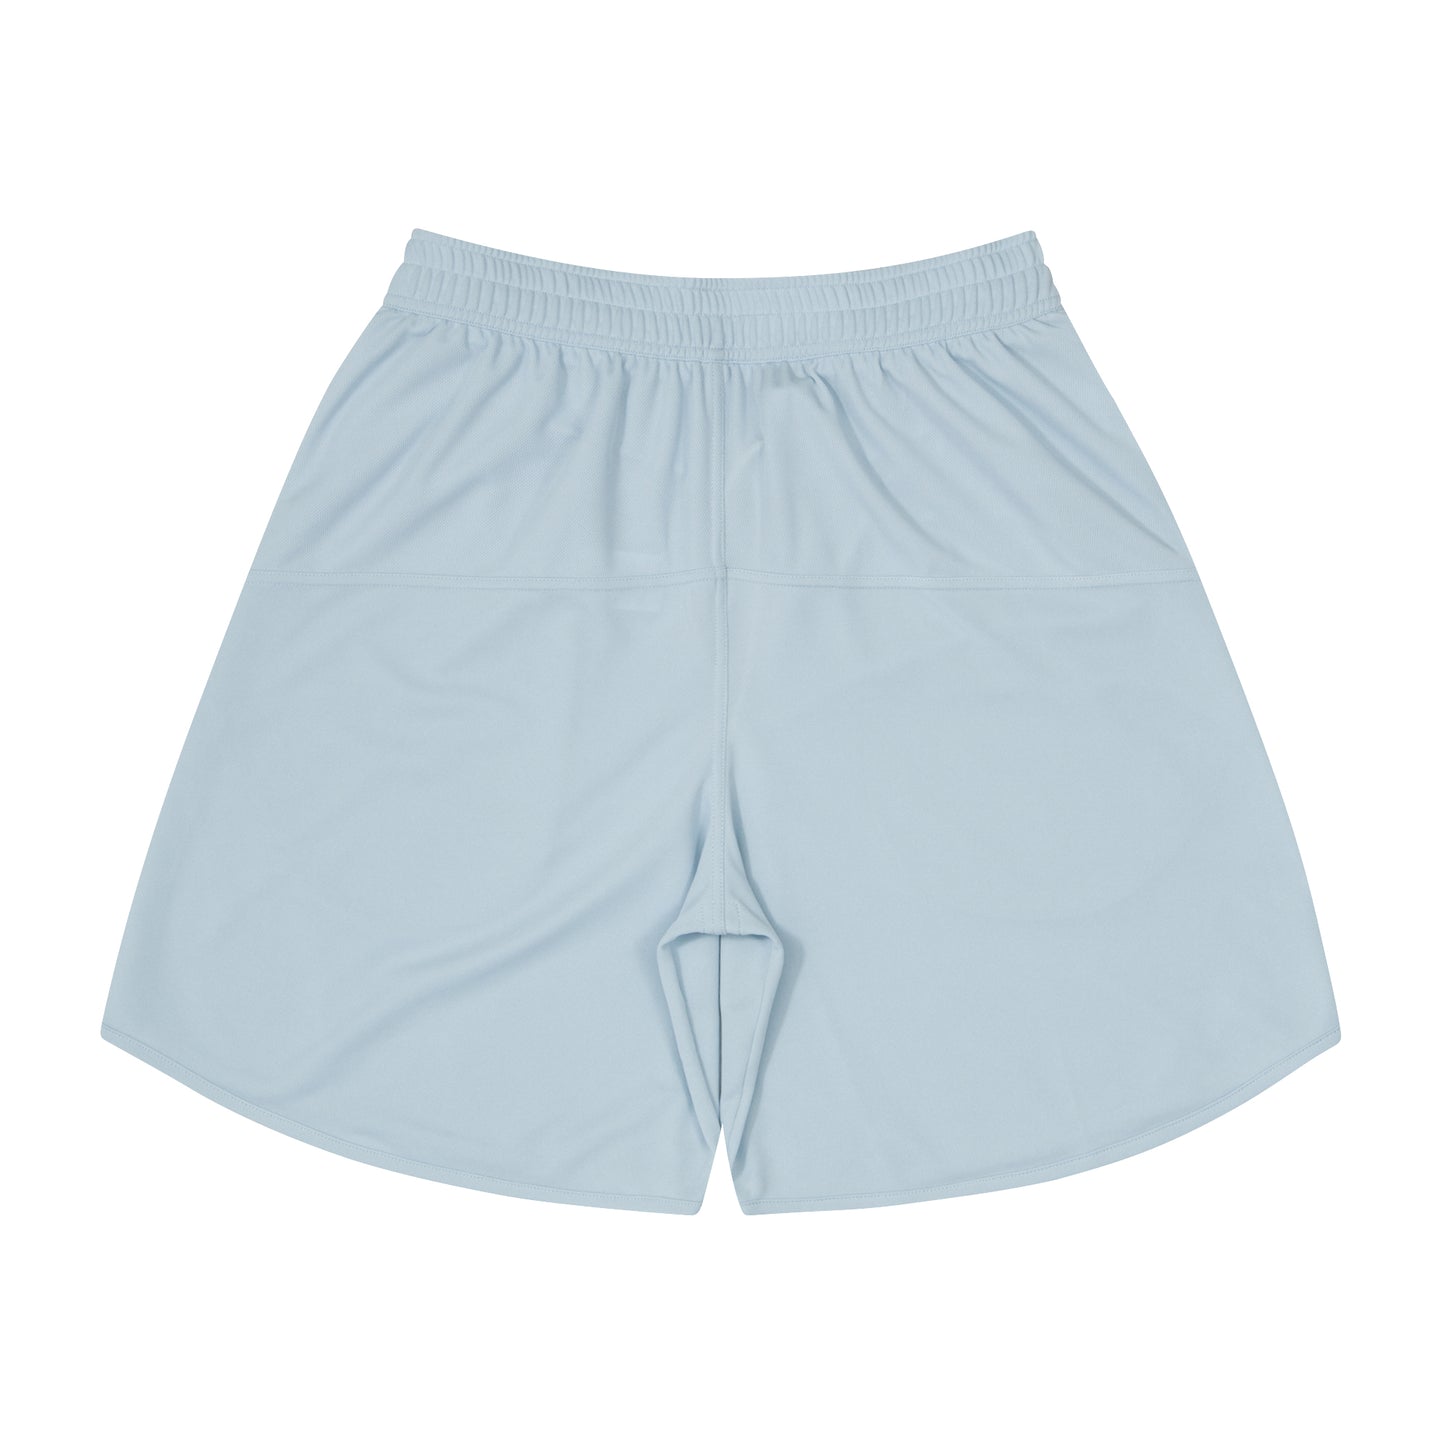 Basic Zip Shorts (cloud blue/off white)